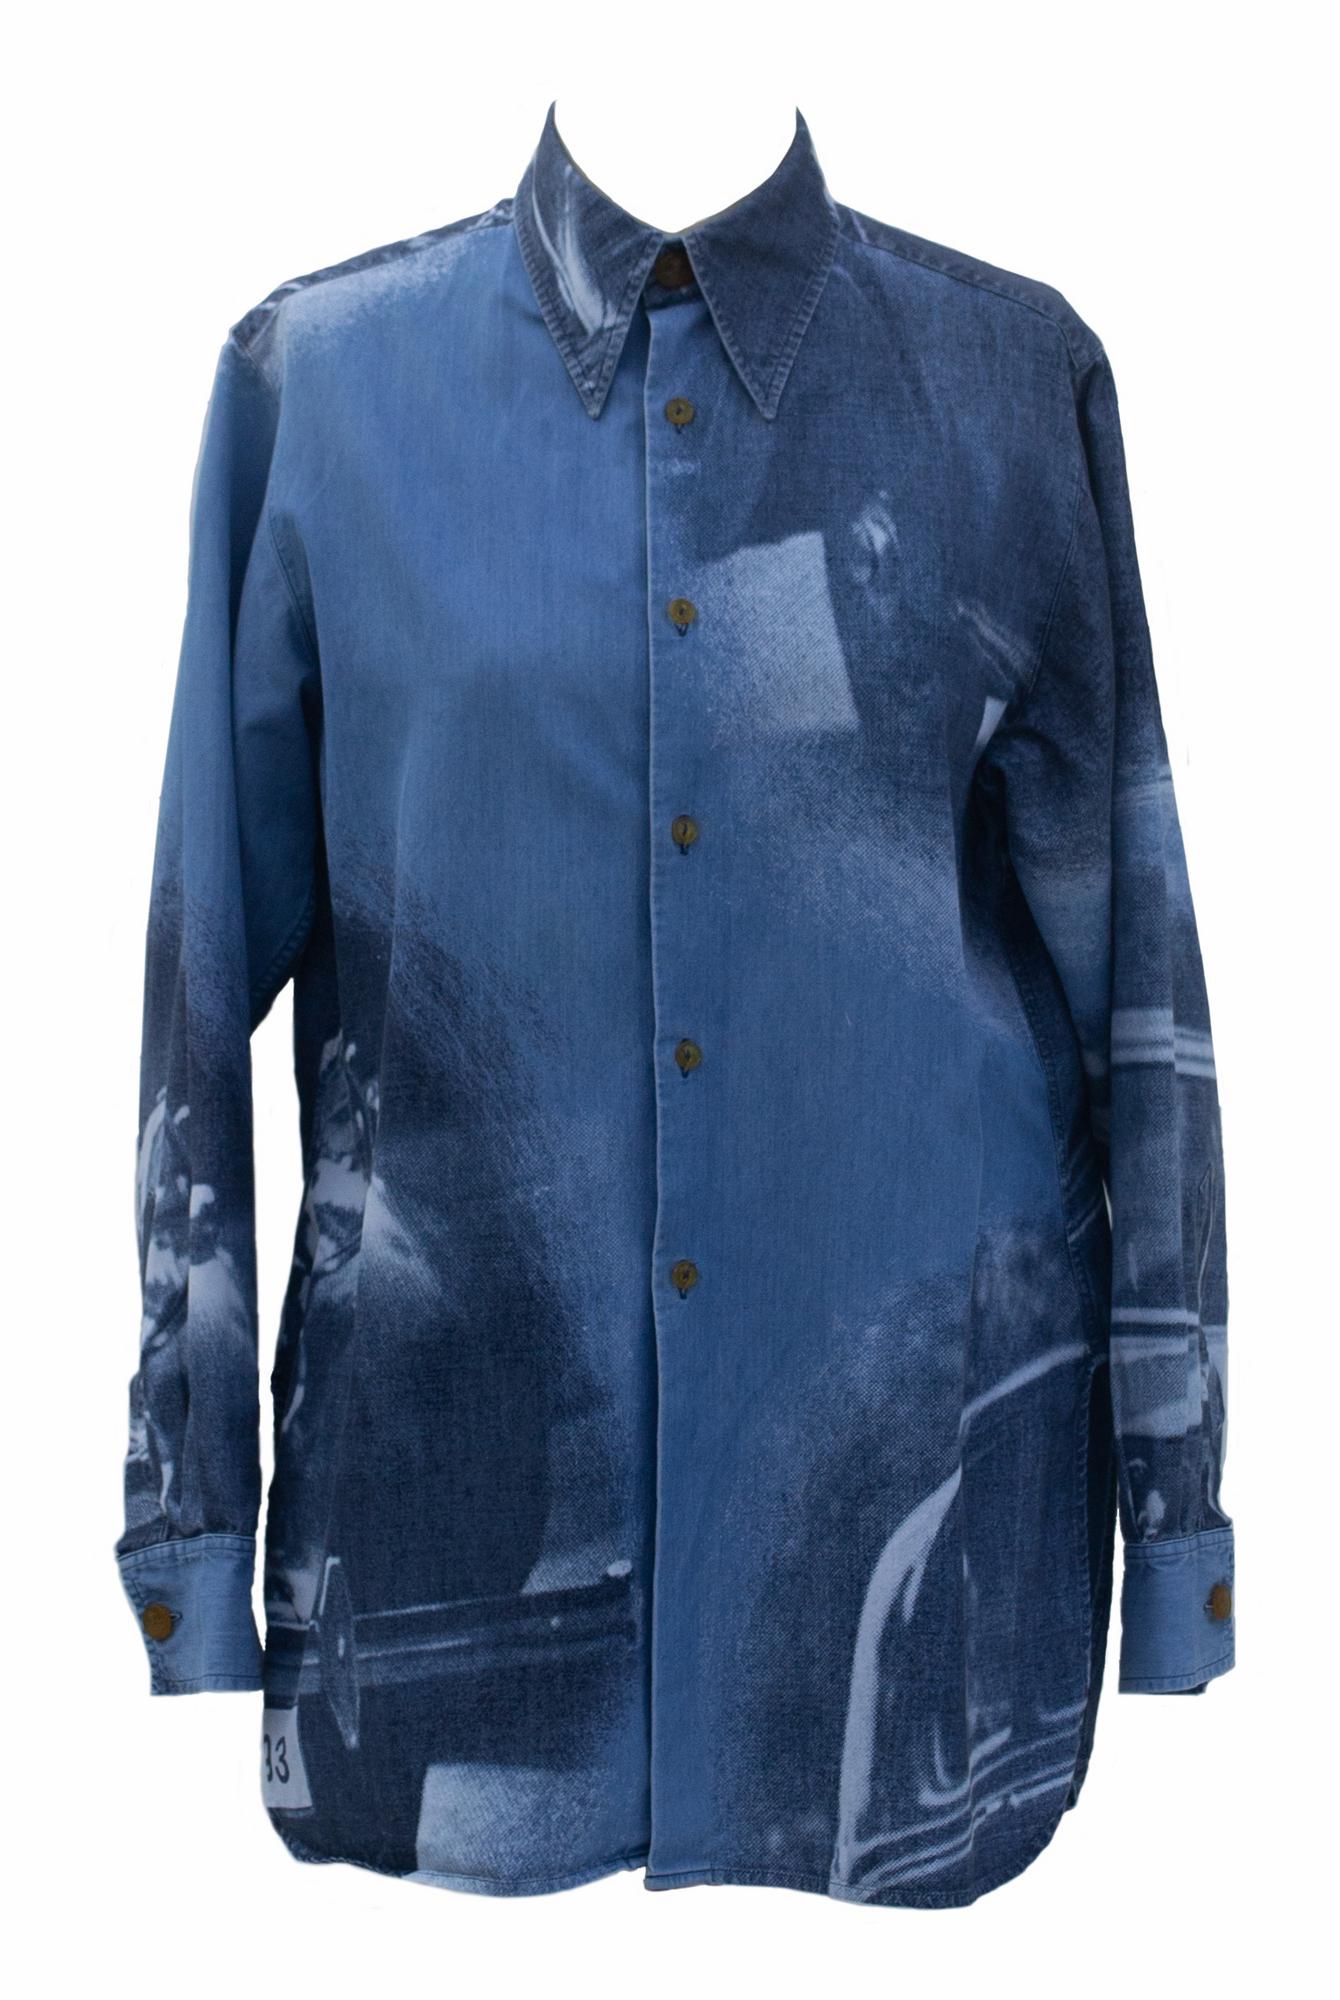 Vivienne Westwood ROLLS ROYCE SHIRT Description: Iconic shirt with Rolls...